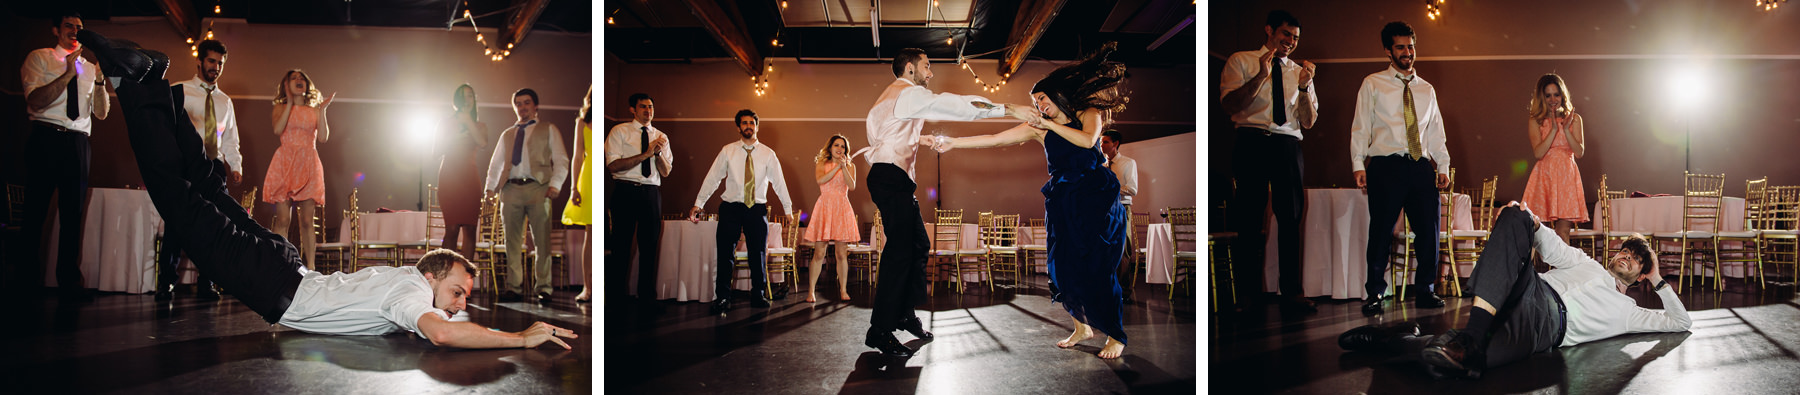 urban studio wedding reception dancing